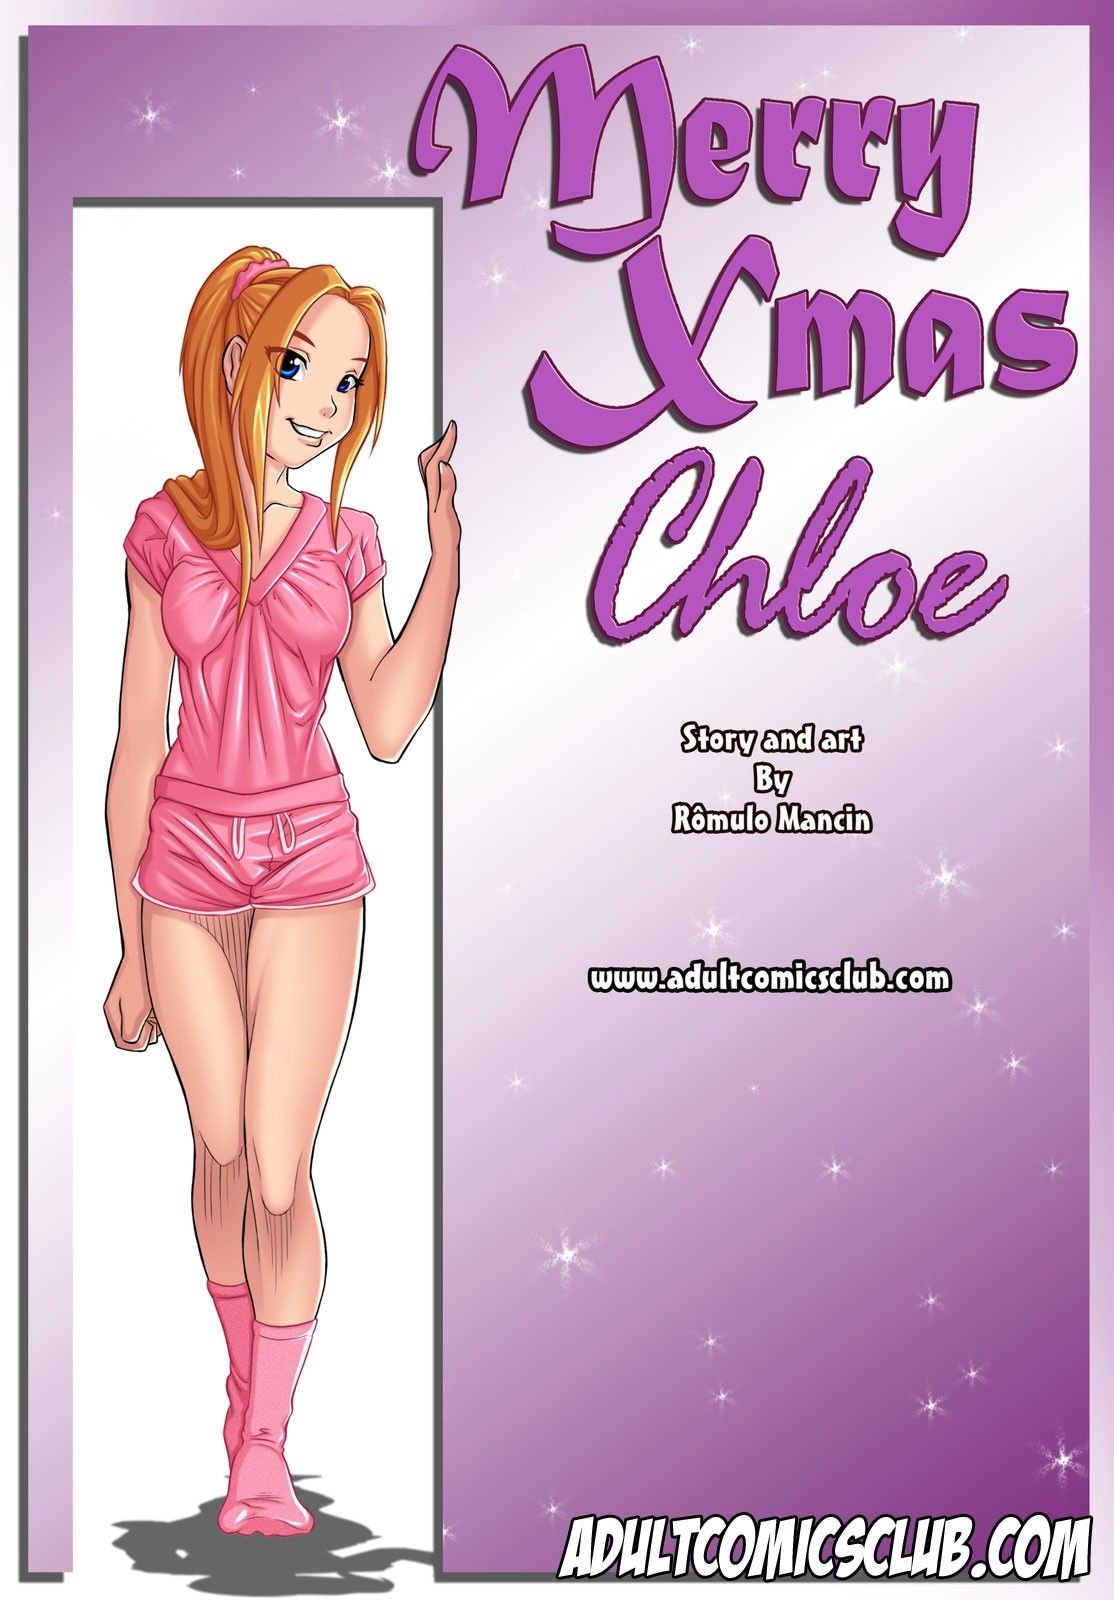 melkor (romulo mancin) Merry Natale Chloe